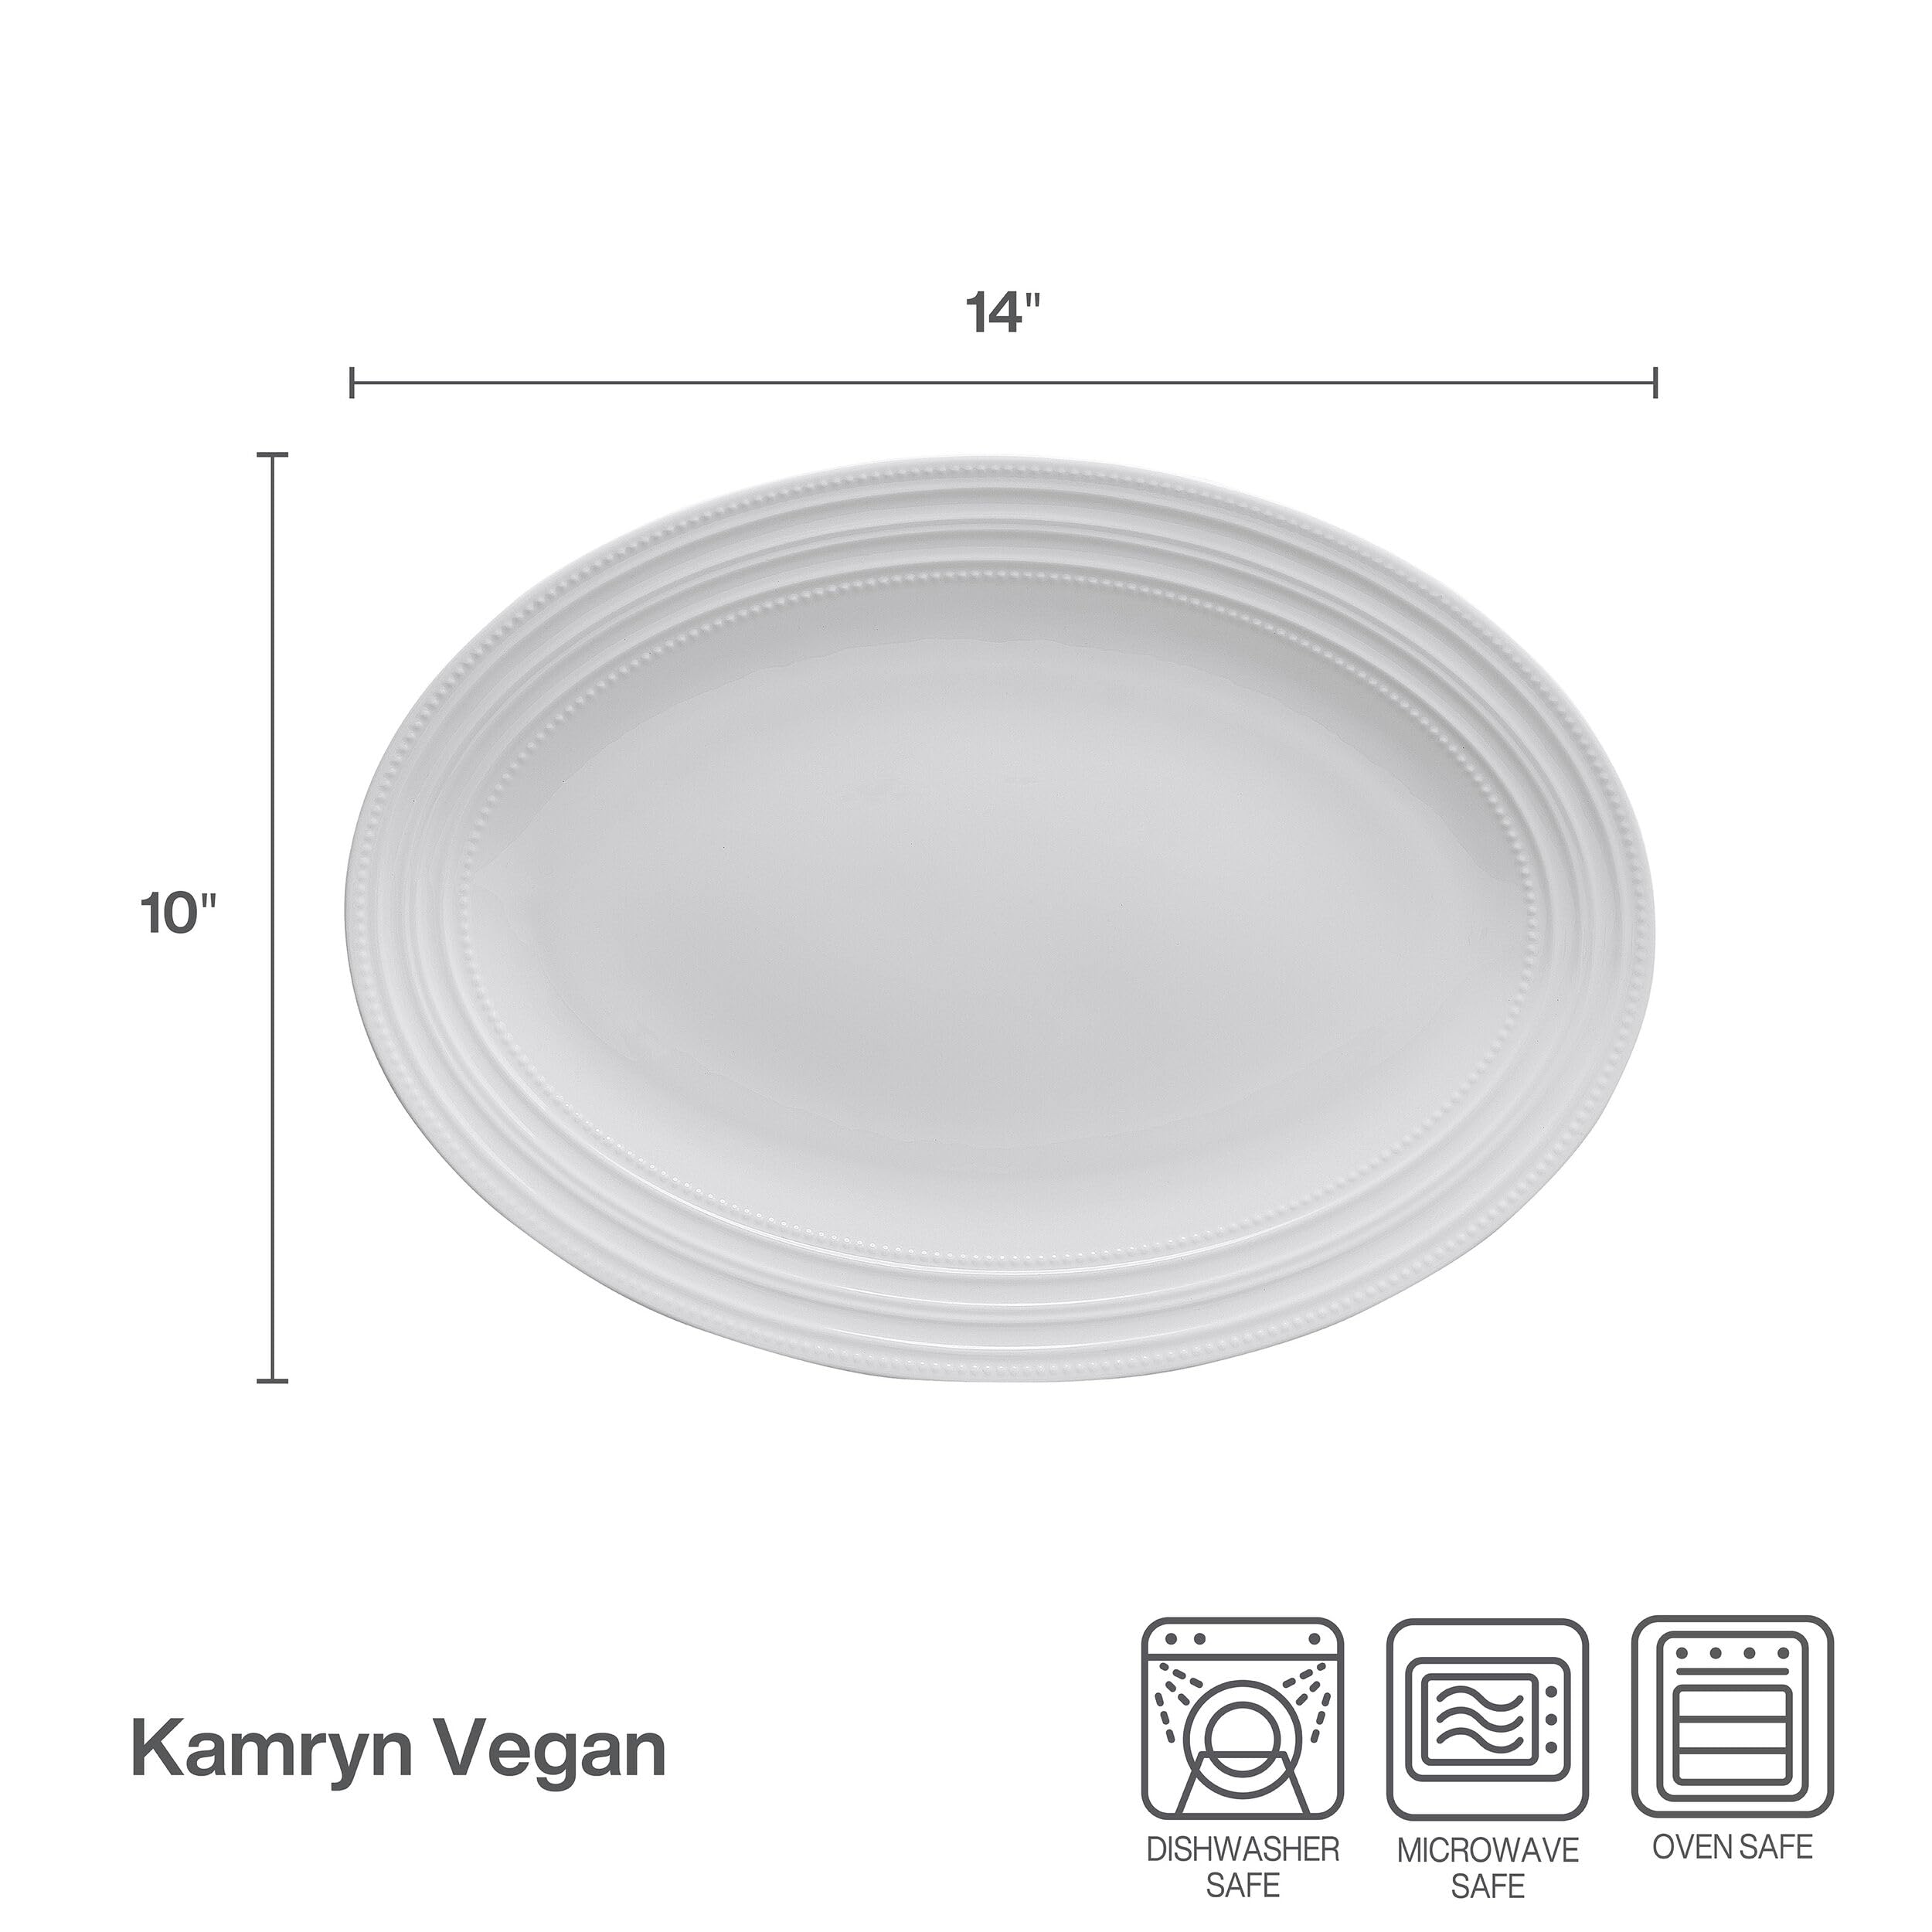 Mikasa Kamryn Vegan Bone China Lightweight Oval Platter, 14 Inch